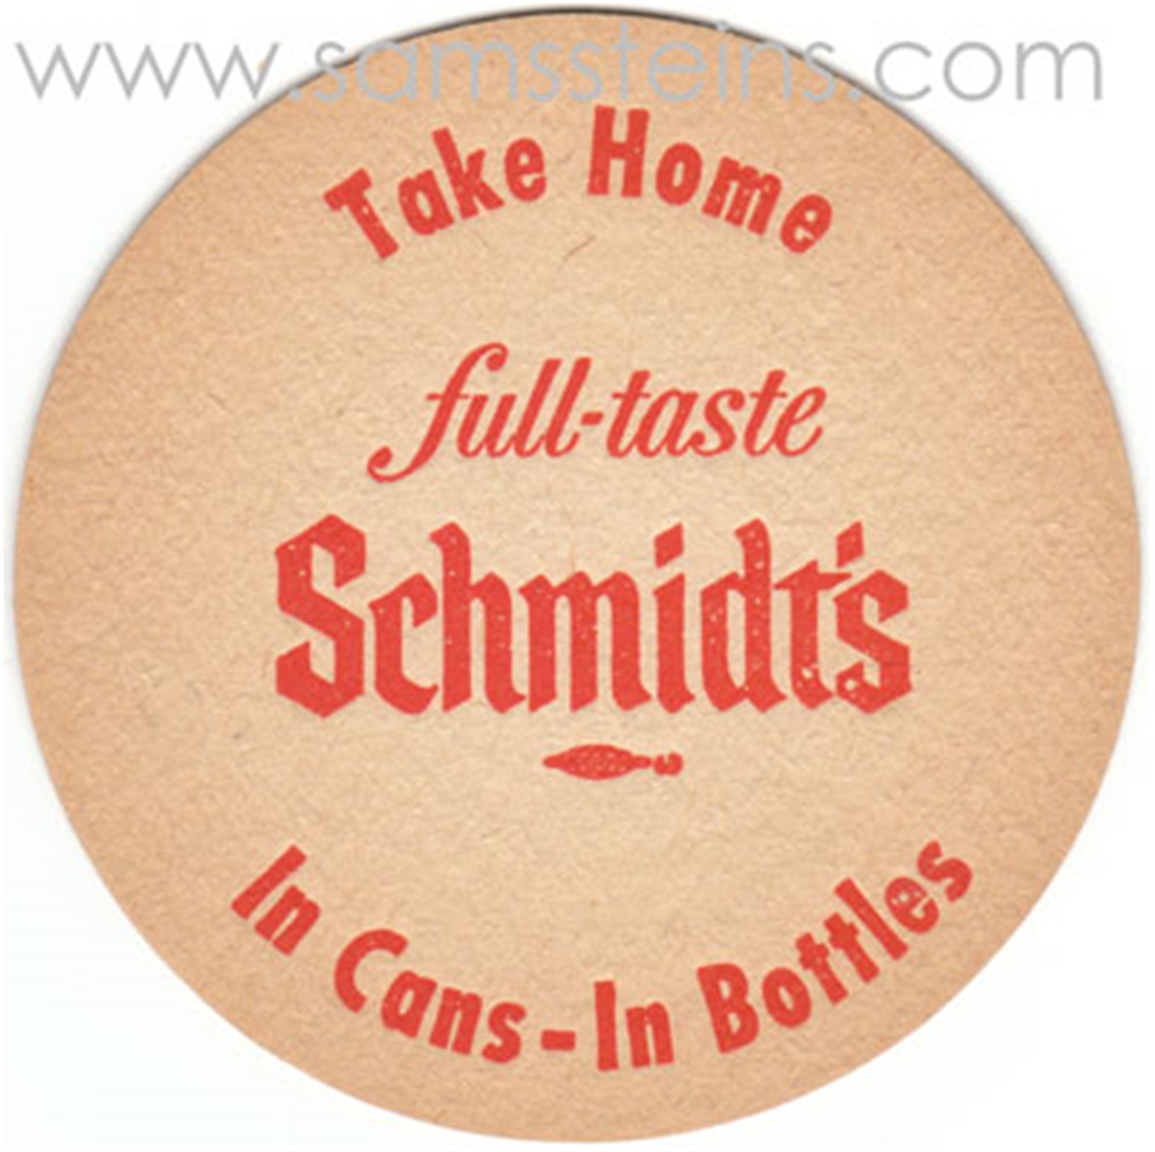 Schmidt's Full Taste Beer Coaster